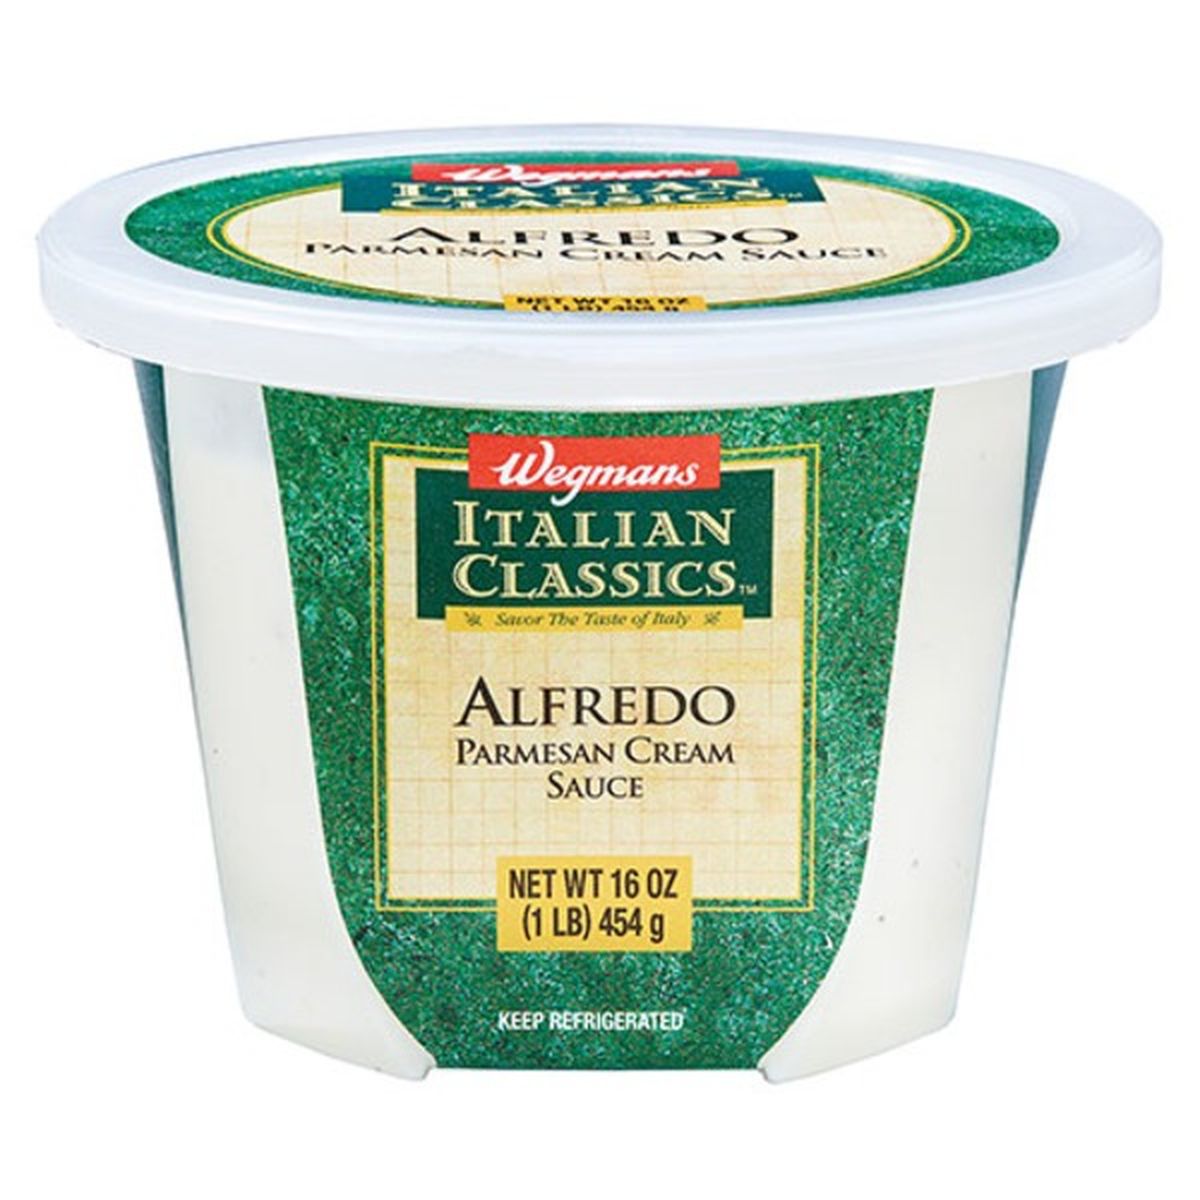 Calories in Wegmans Italian Classics Alfredo Parmesan Cream Sauce